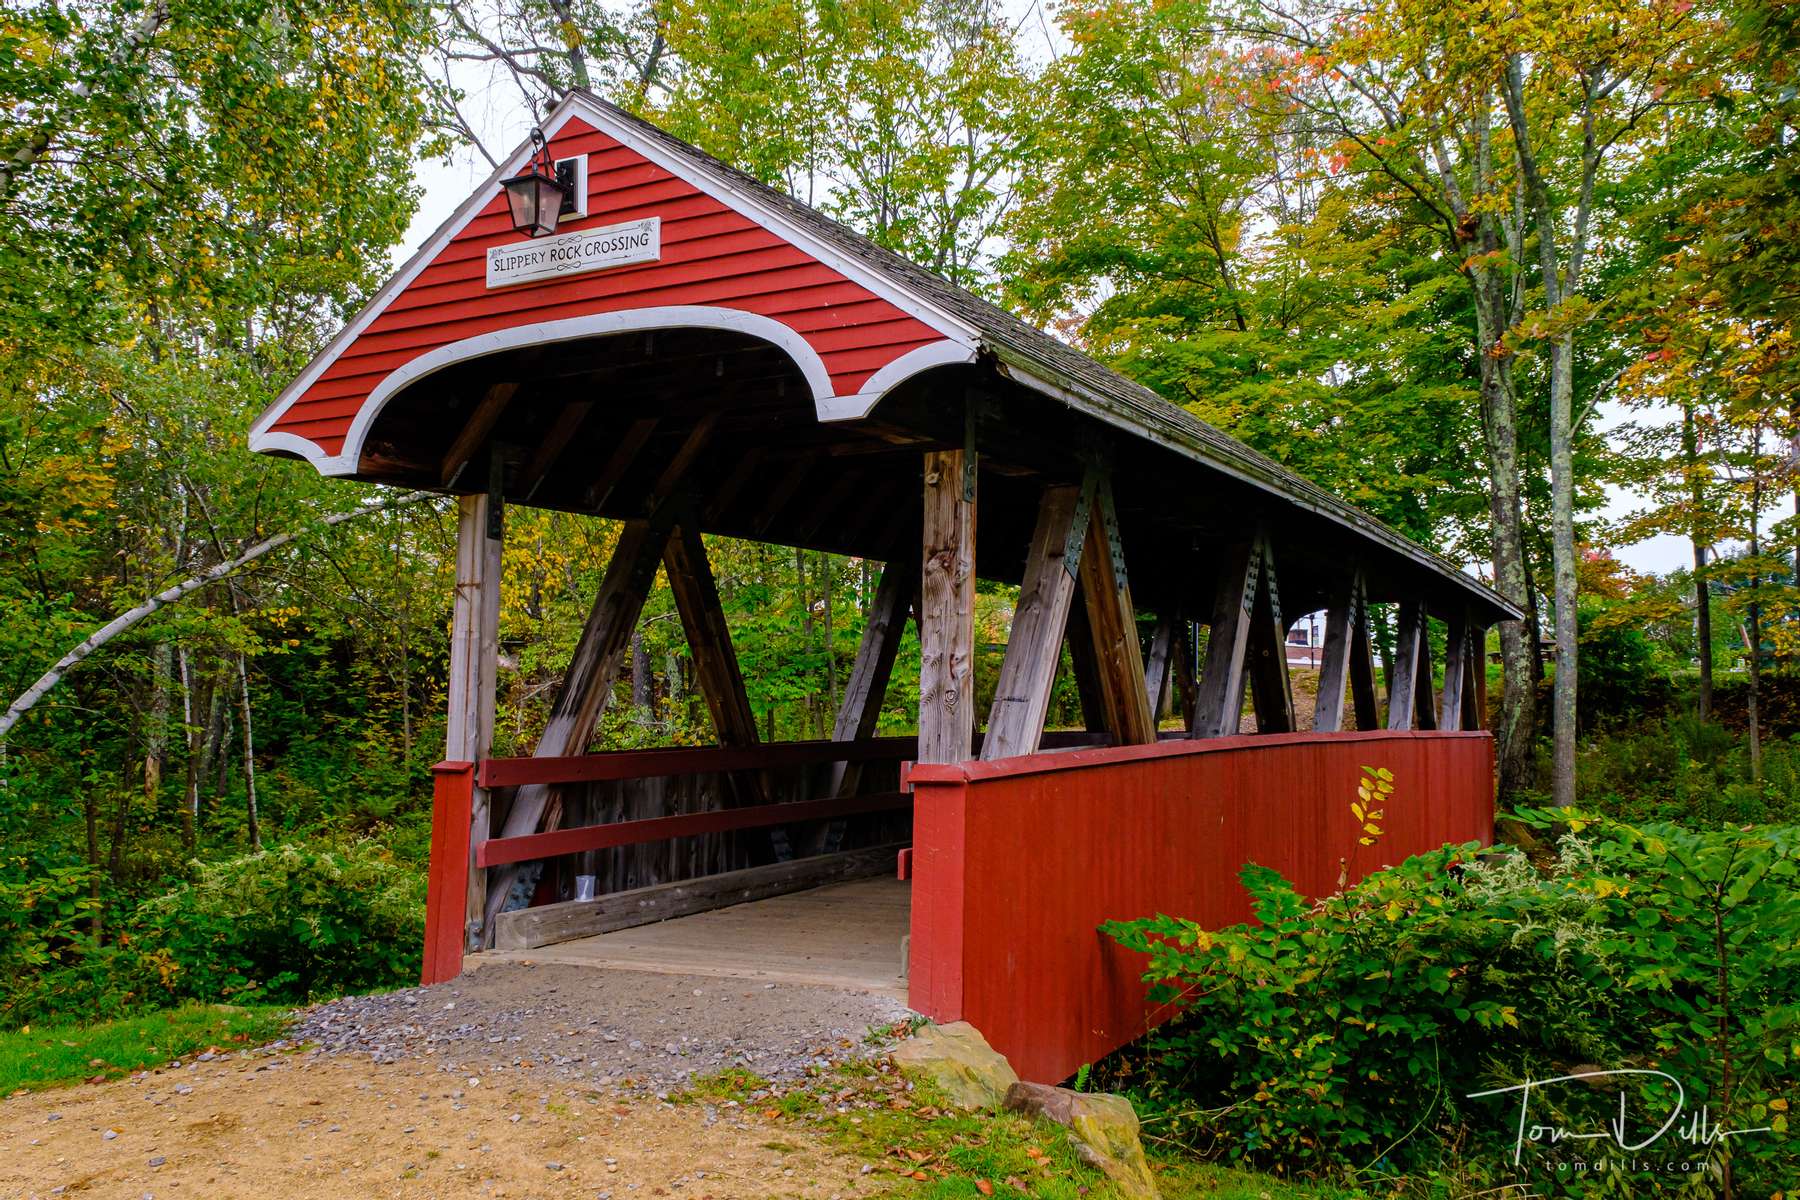 Belmont Covered Bridge in Belmont, New Hampshire